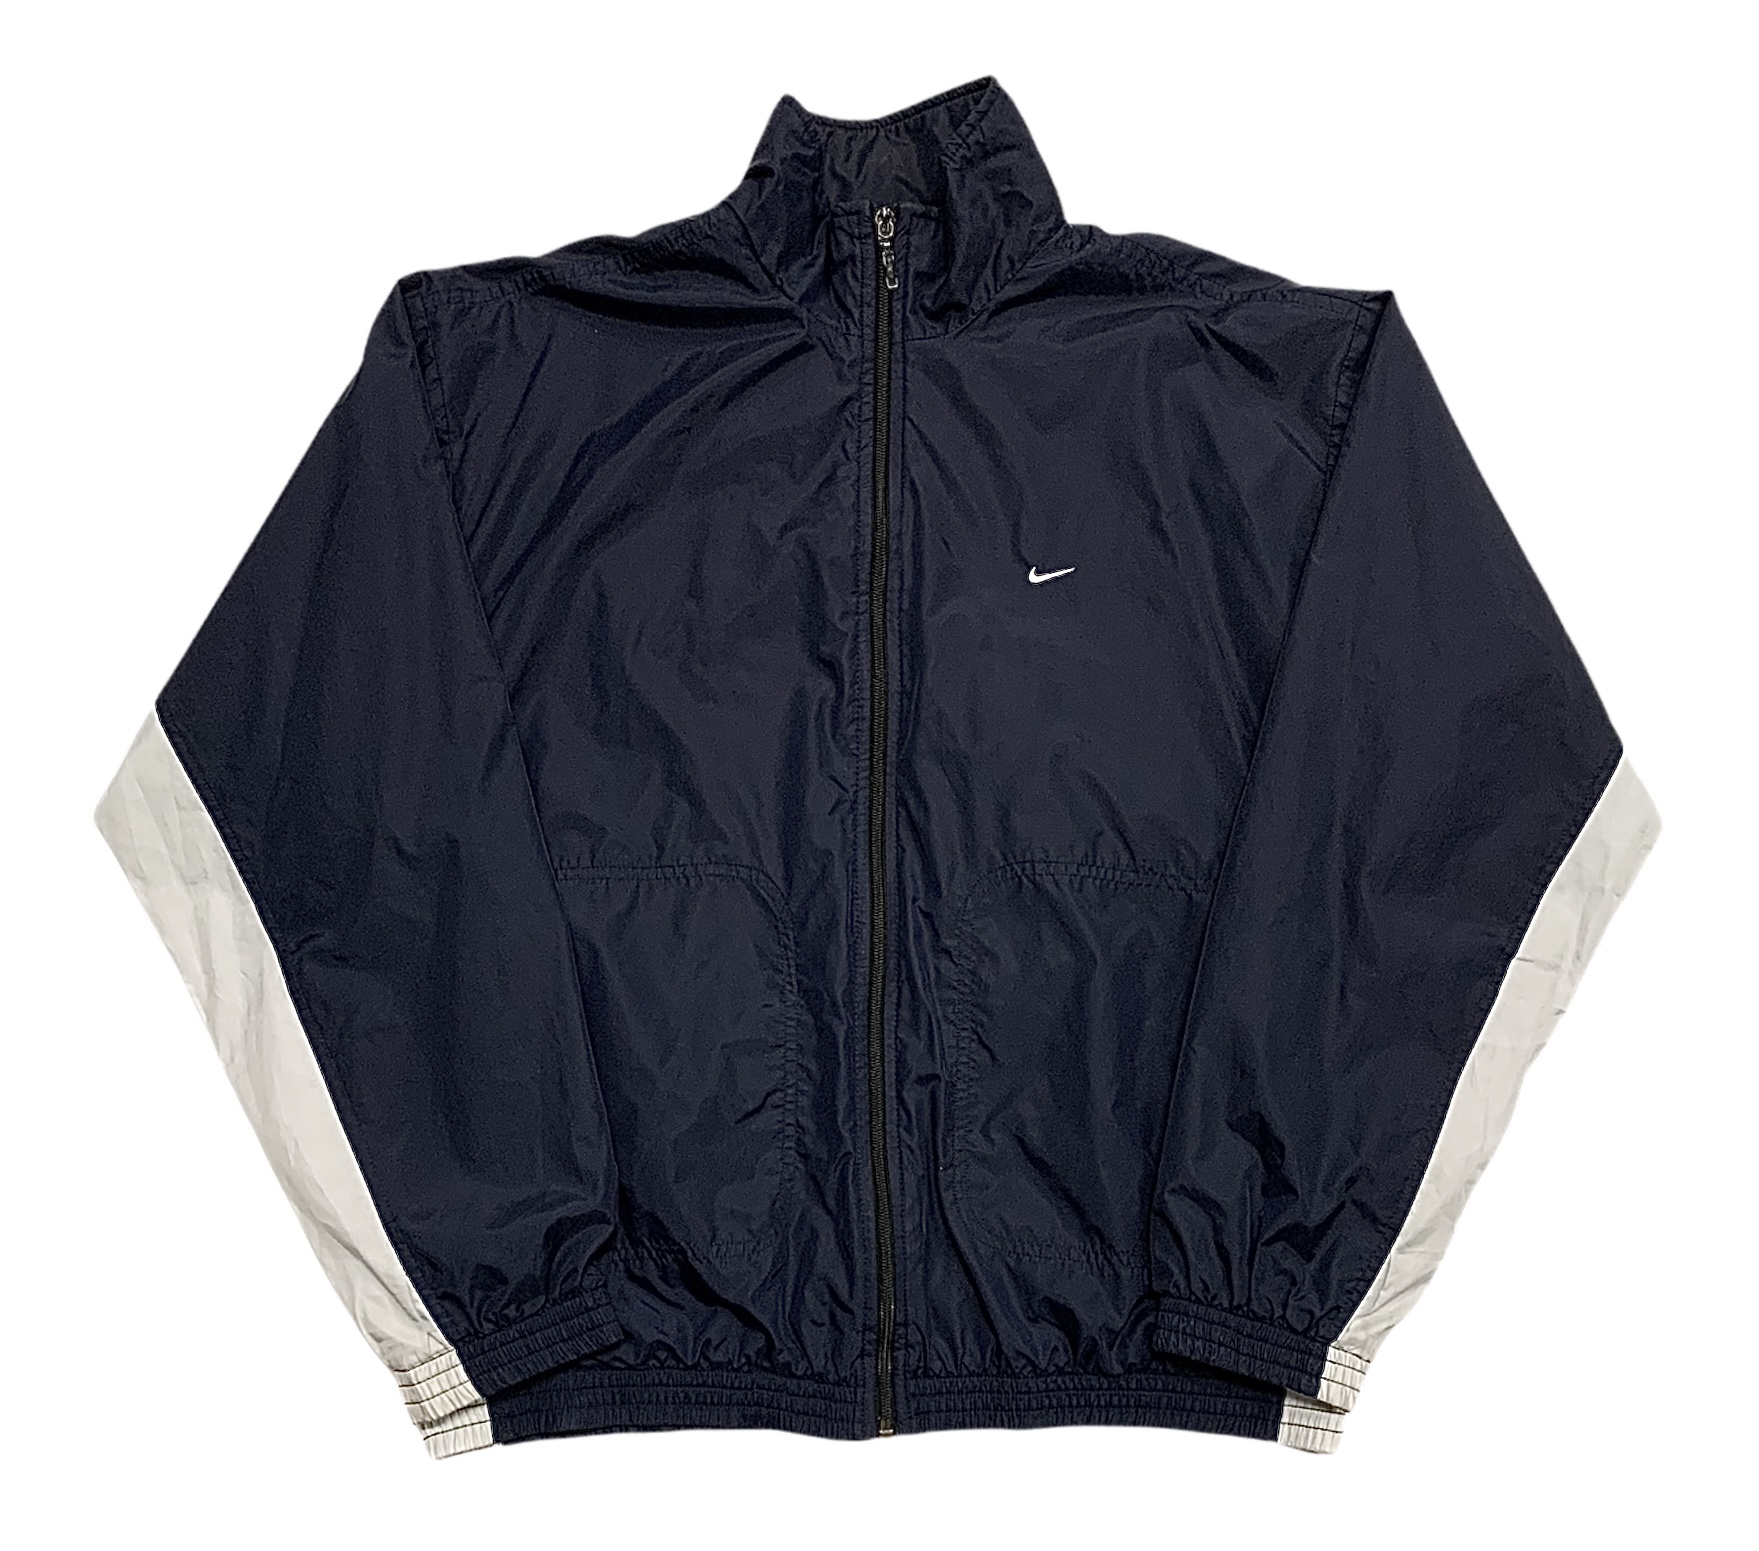 Nike light jacket - Lowkey Archives